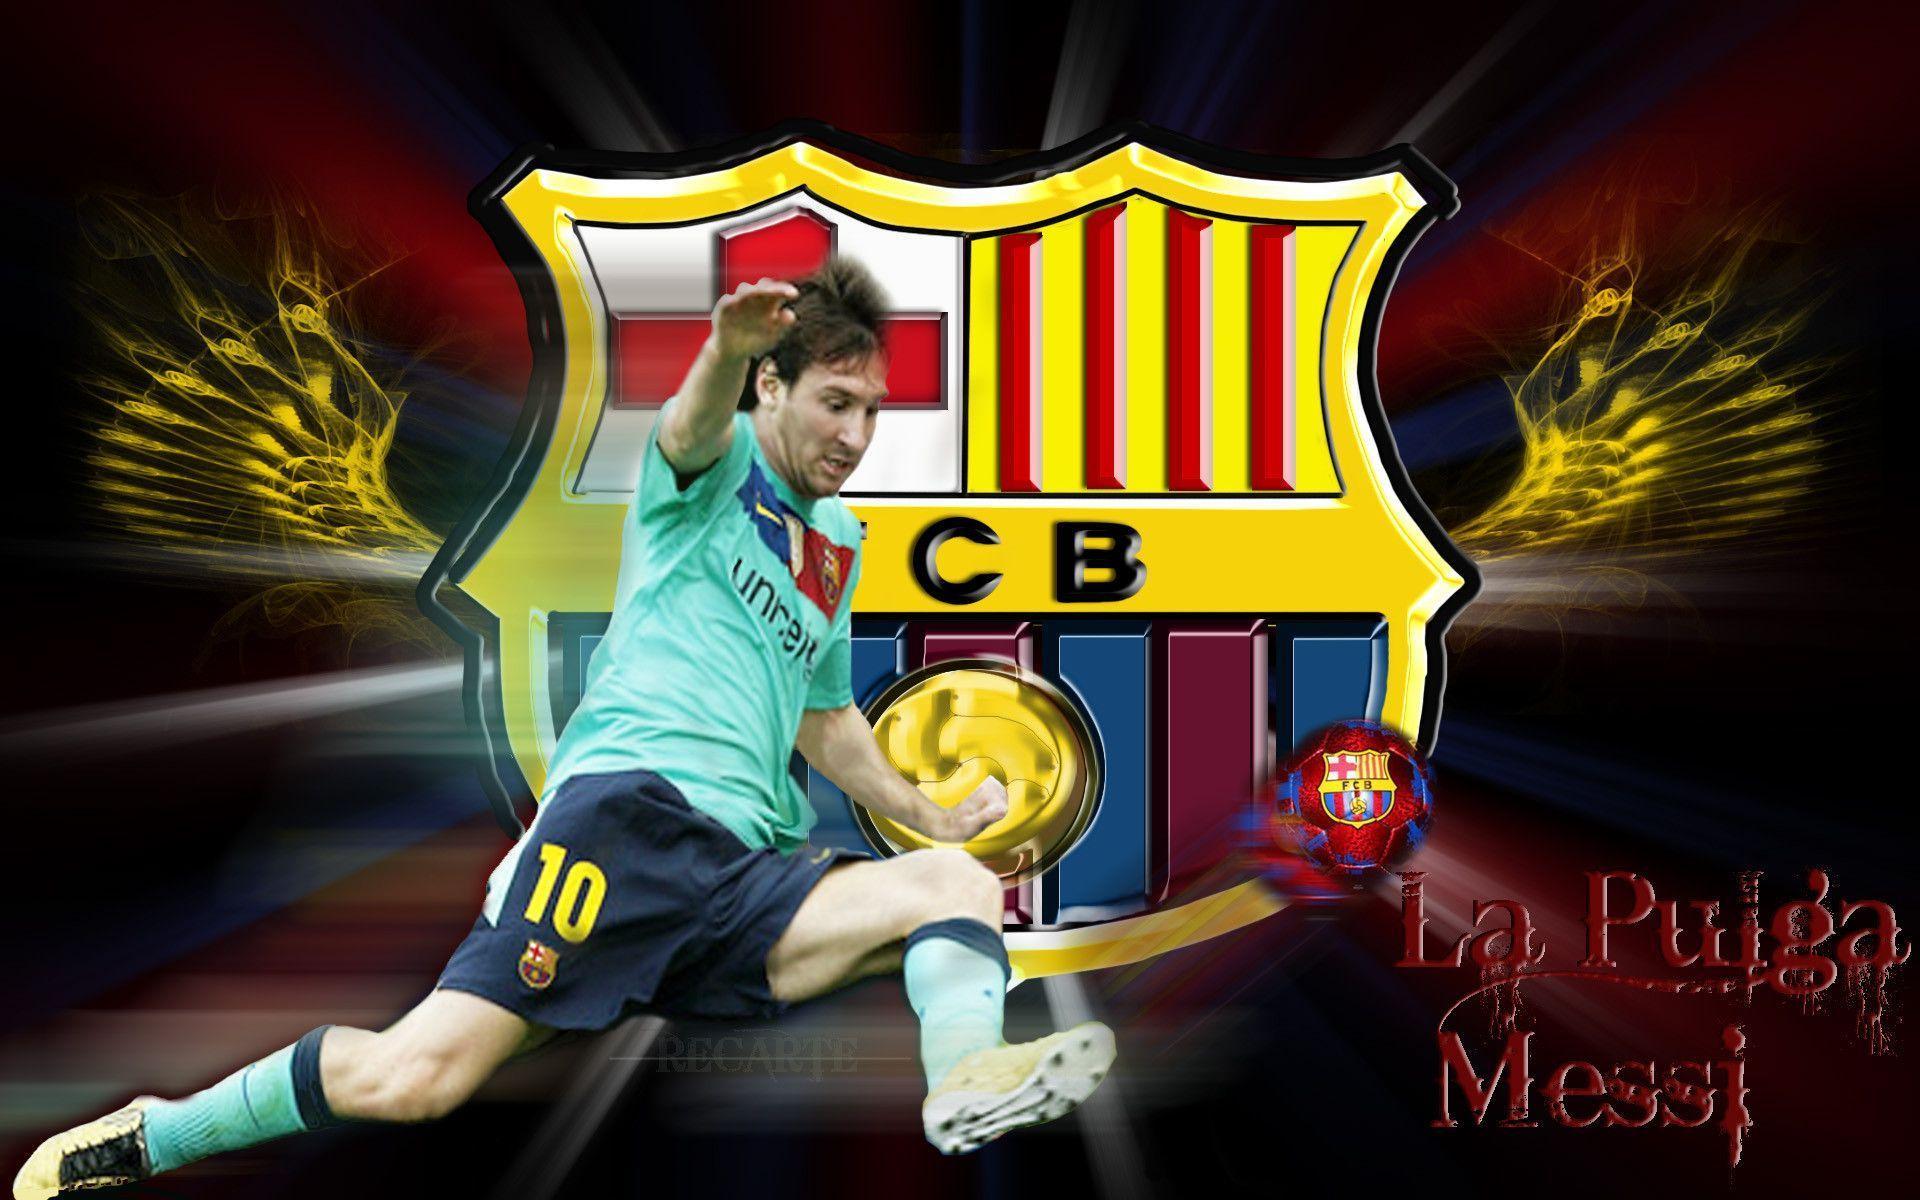 Lionel Messi barca Image, HD Picture, Background, Desktop